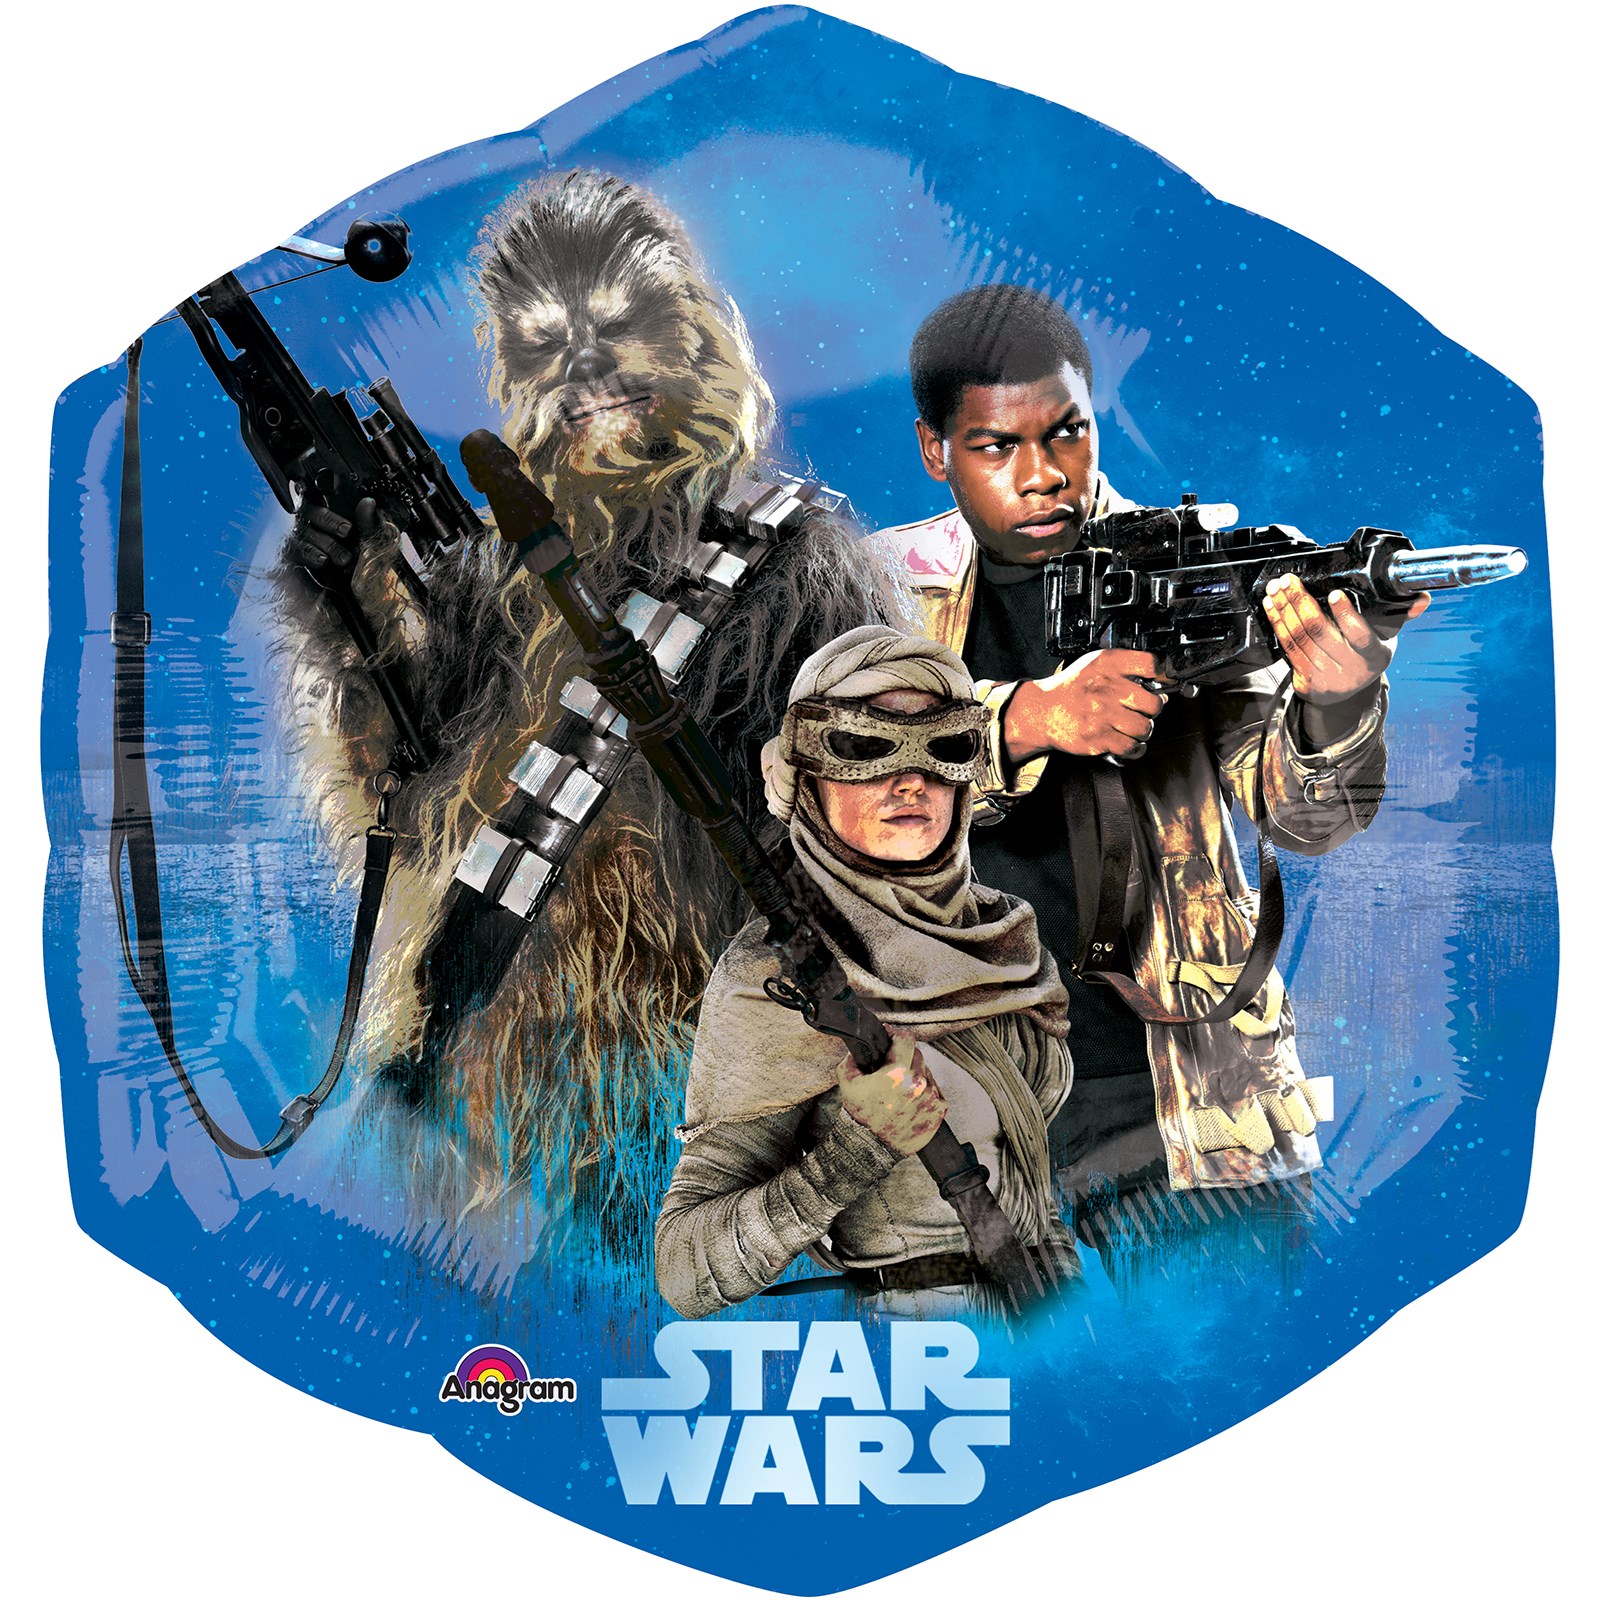 Star Wars 7 The Force Awakens Supershape Foil Balloon